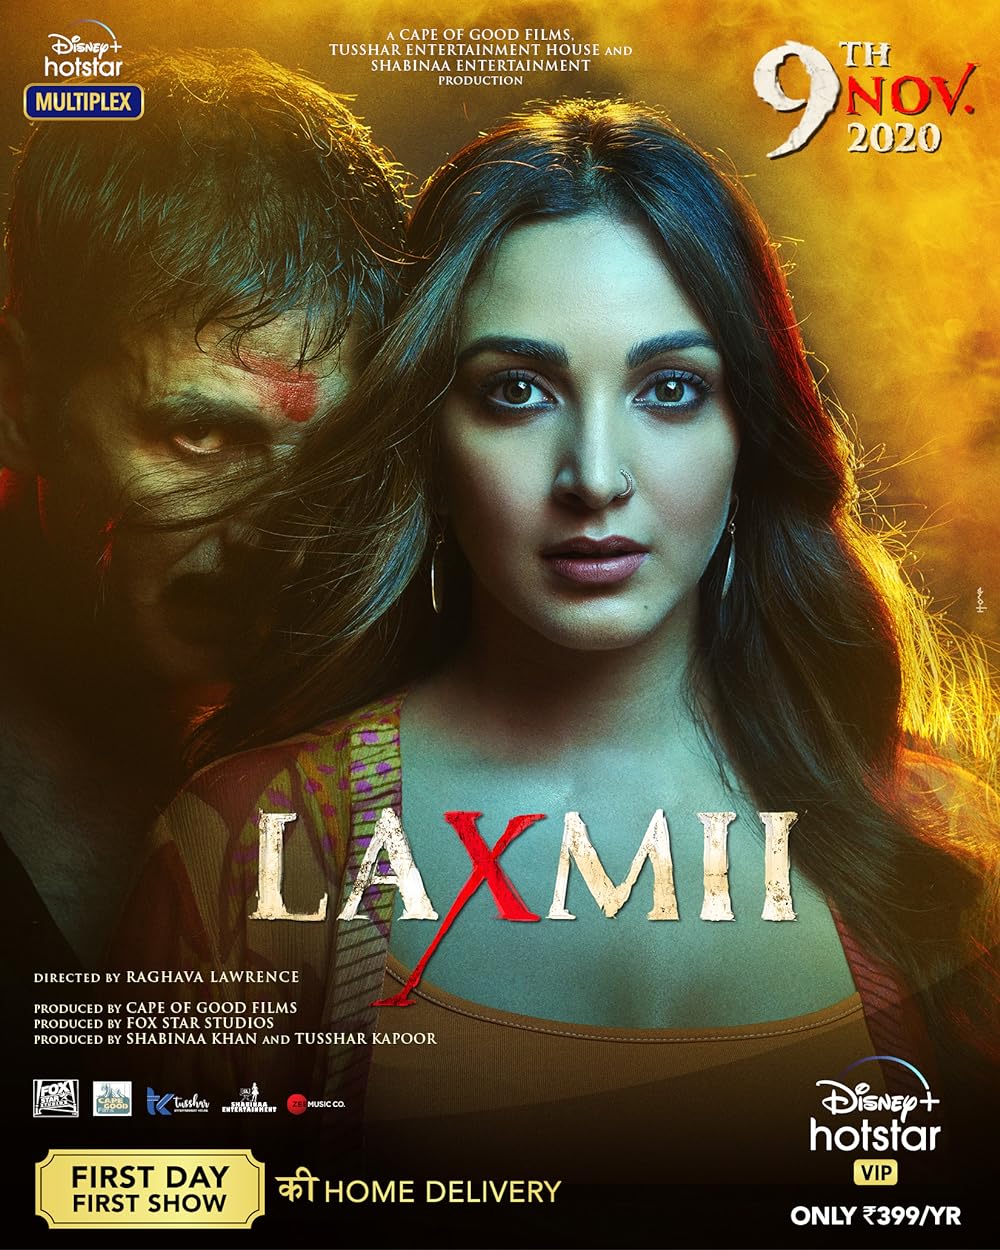 assets/img/movie/Laxmii 2020 Hindi Movie 1080p HDRip 2.6GB Download 9xmovieshd.jpg 9xmovies